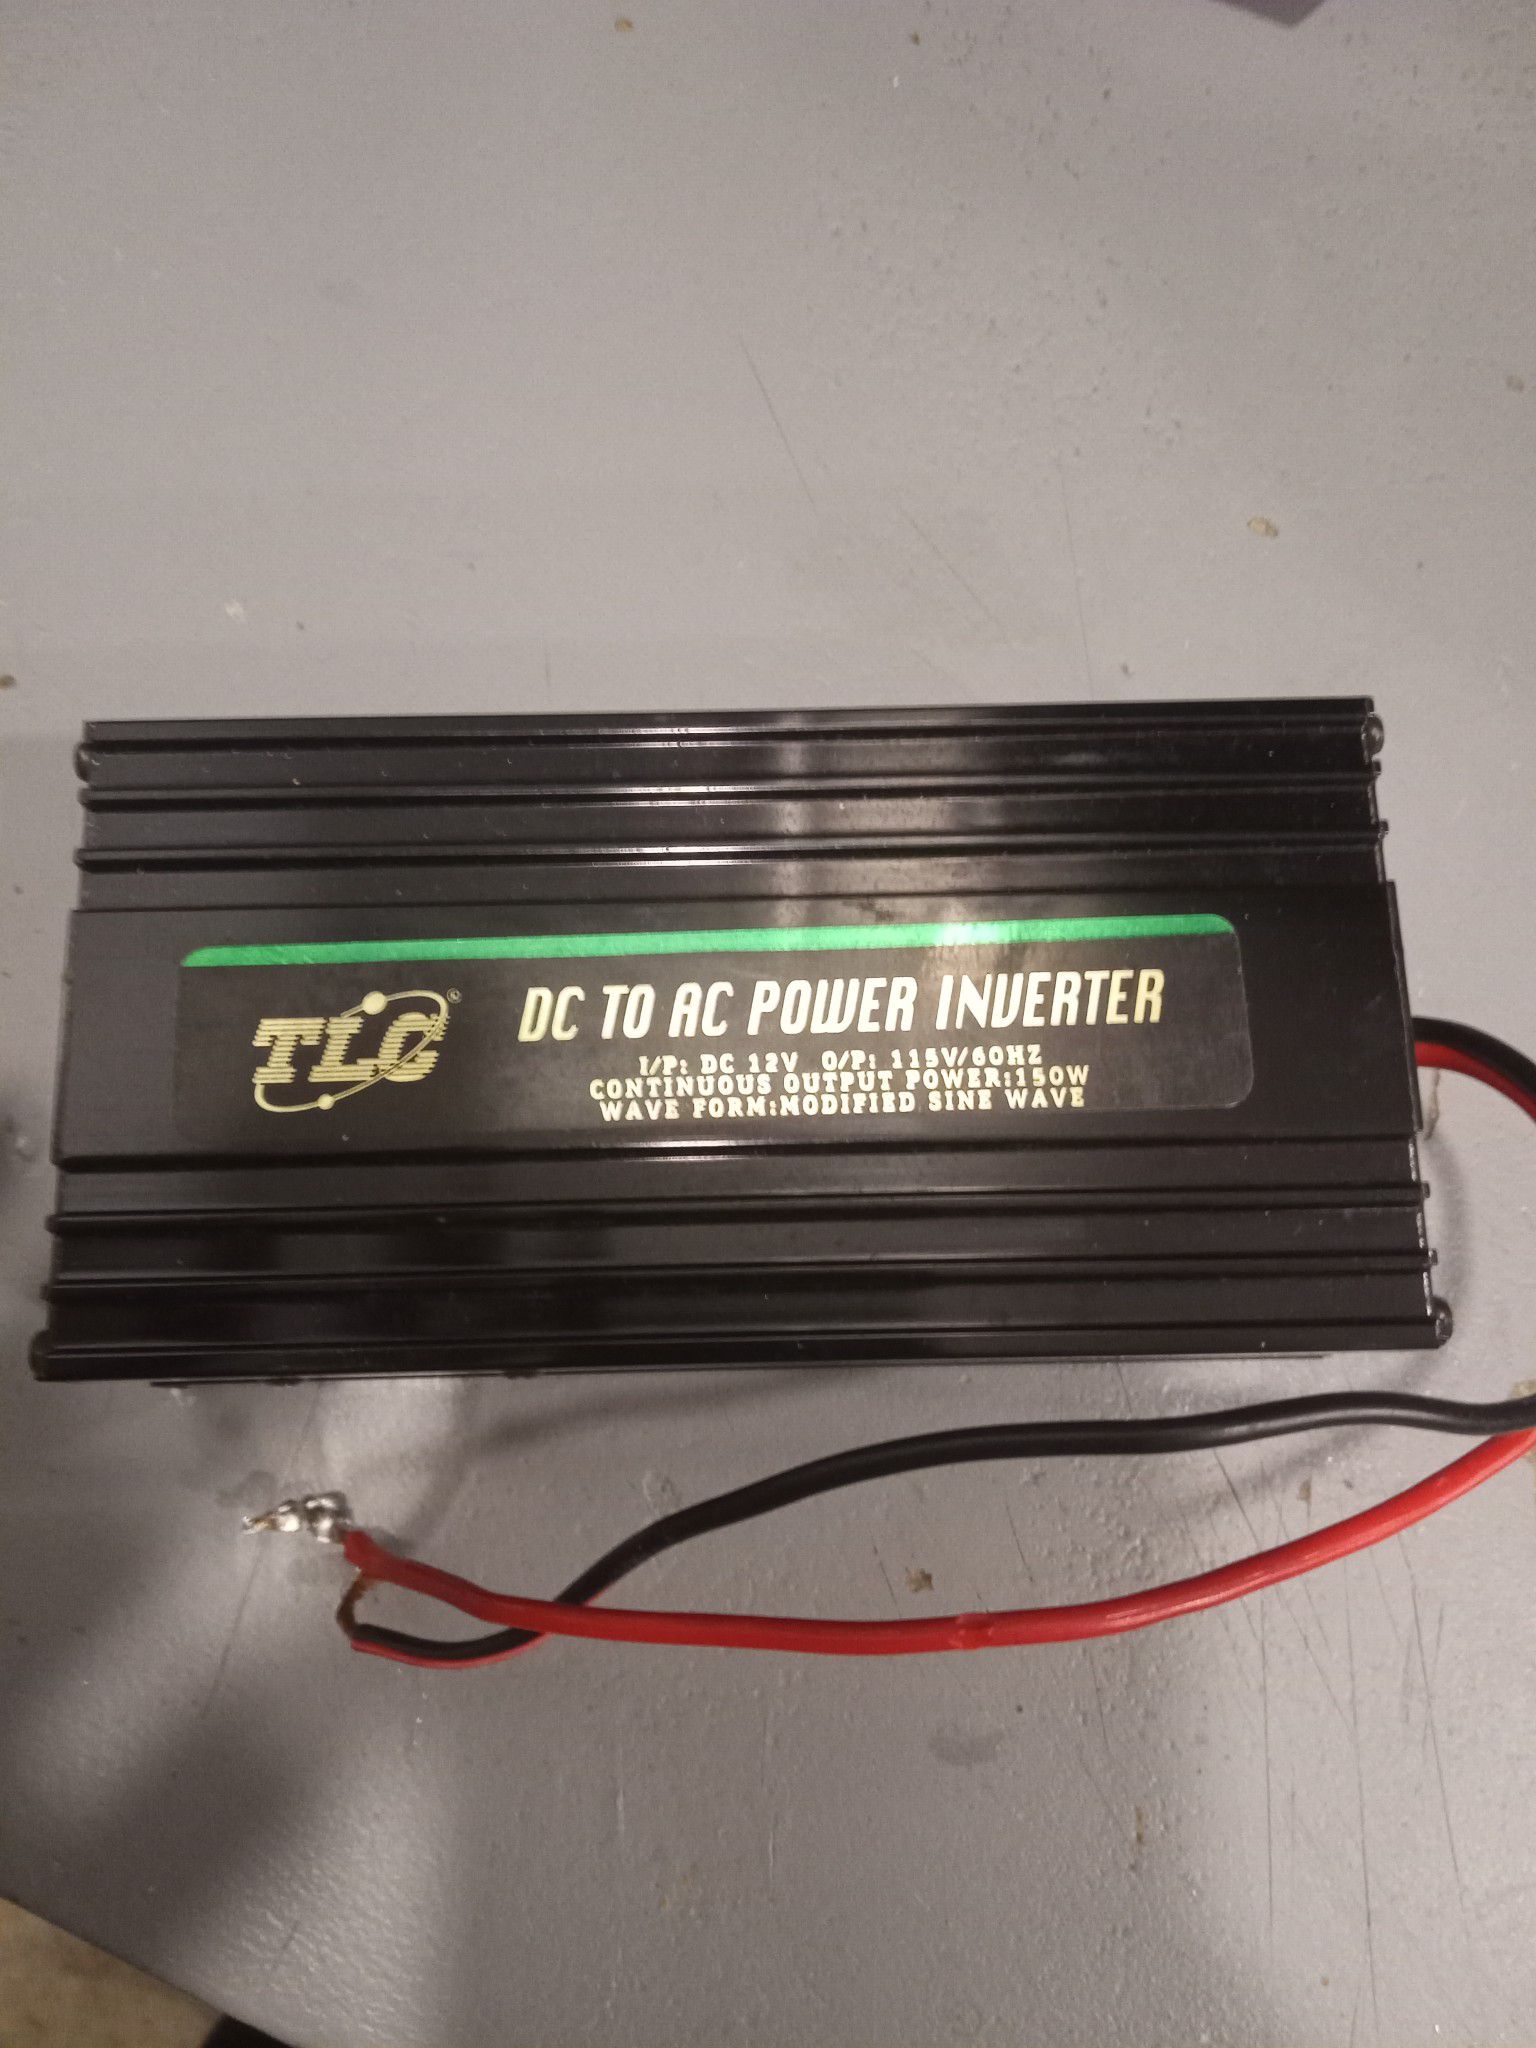 Dc to ac power inverter